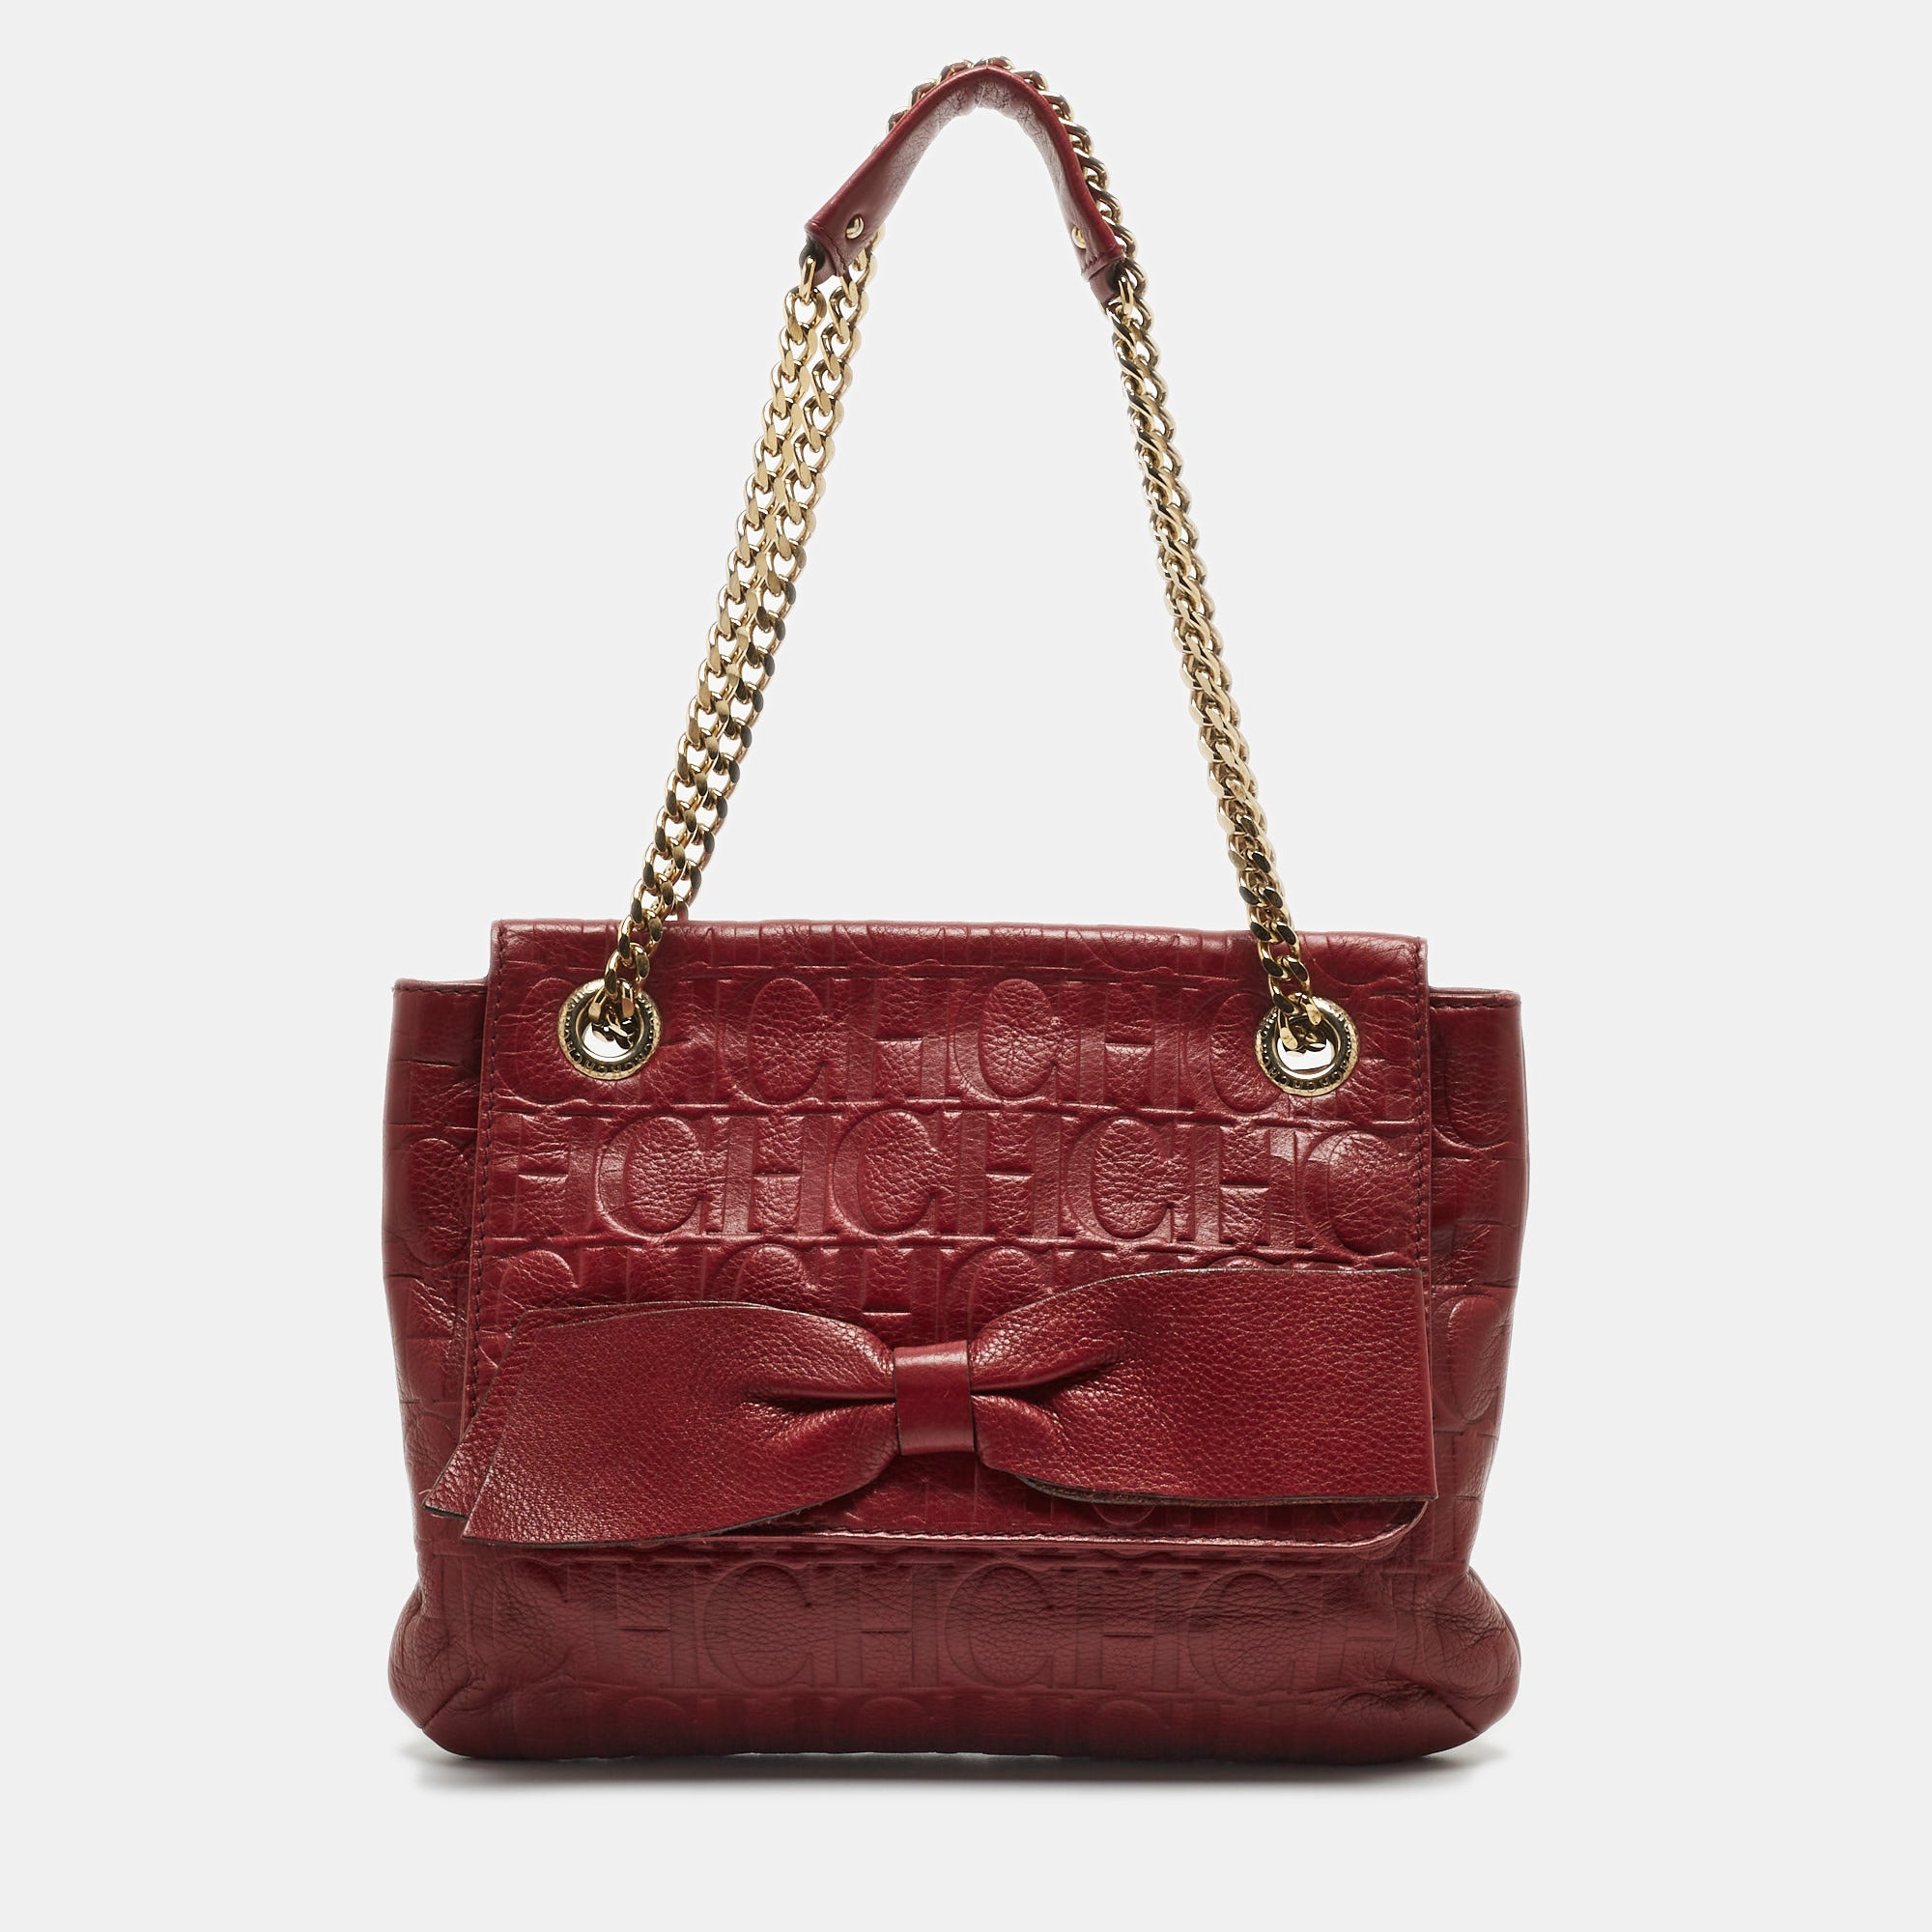 Carolina Herrera | Bags | Carolina Herrera Red Leather Handbag Monogram Ch  | Poshmark